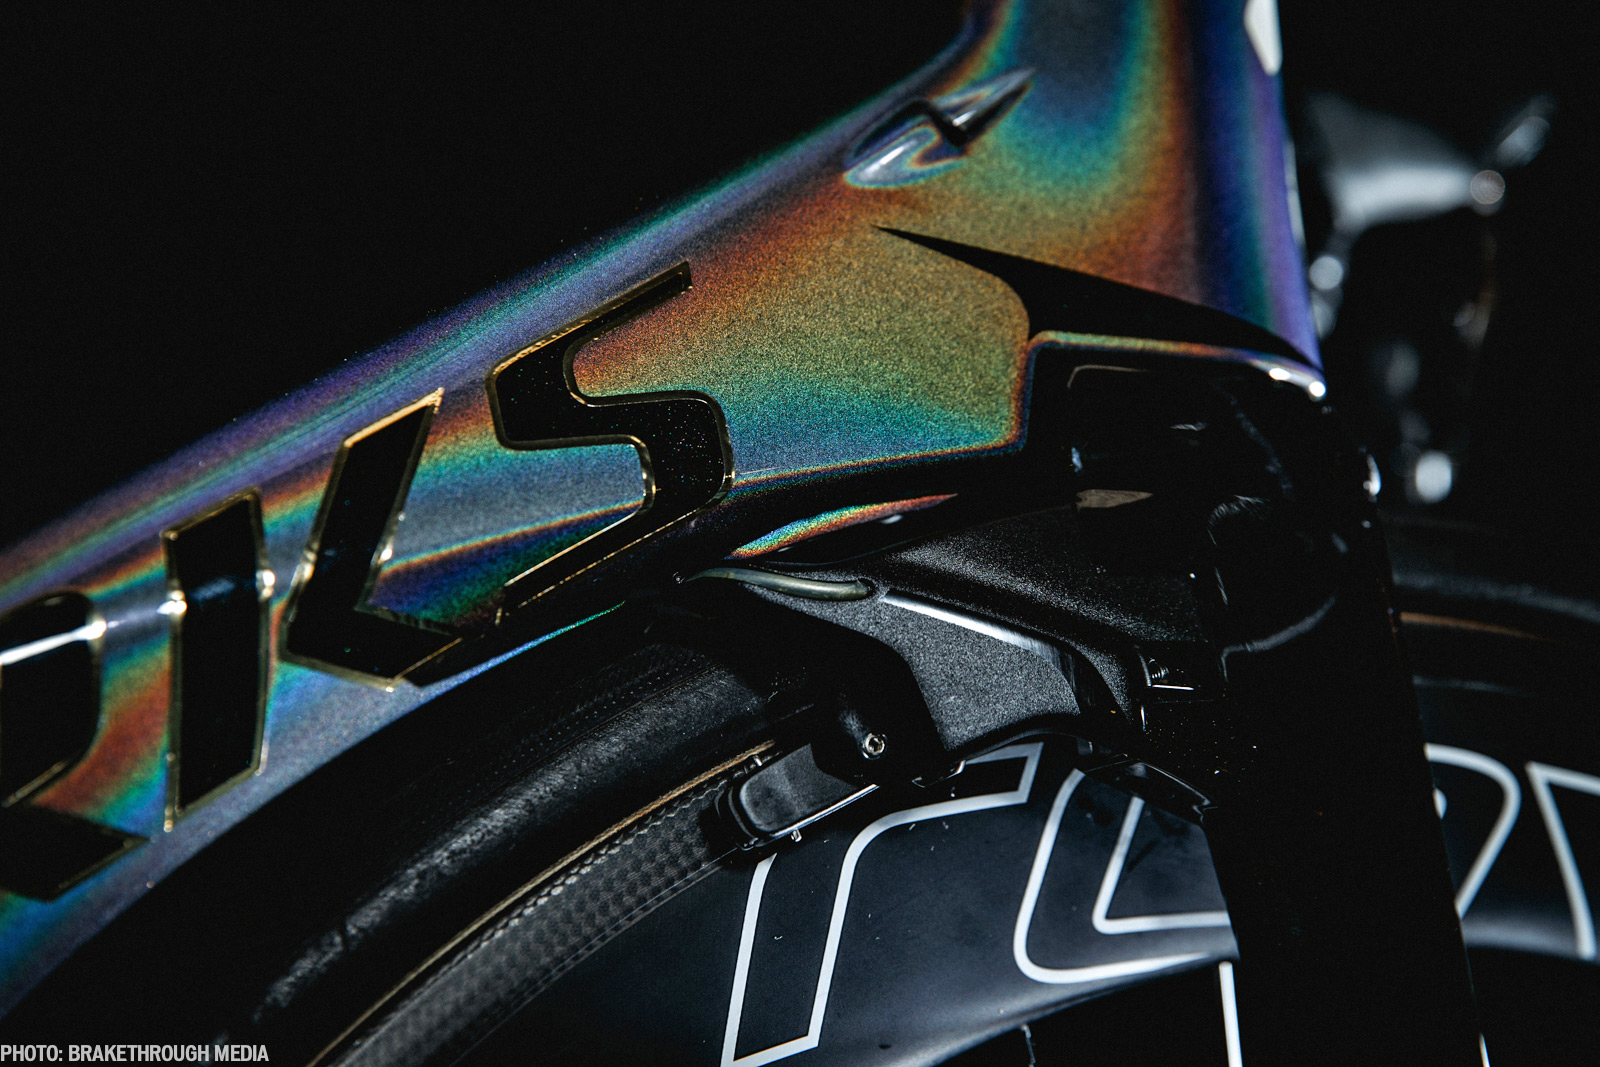 World Champion Peter Sagan’s ultra shiny new Specialized S-Works Venge ViAS